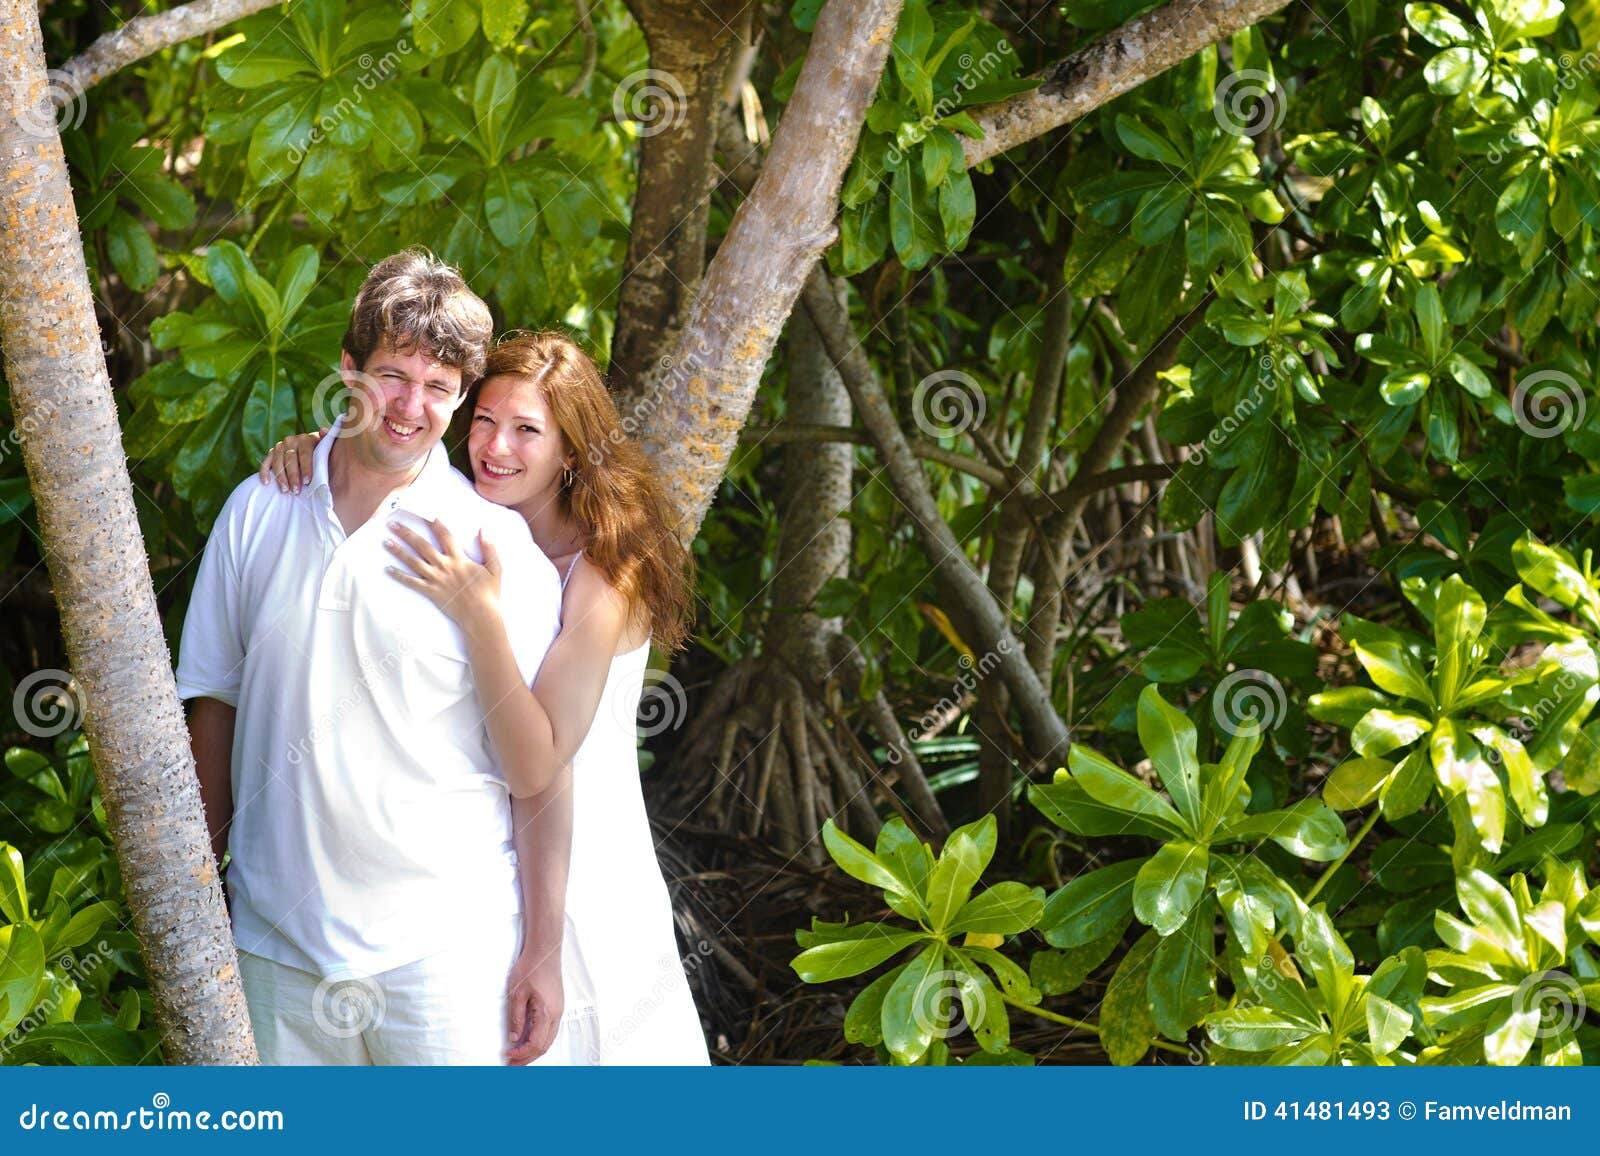 beutiful couple in a tropical jungle